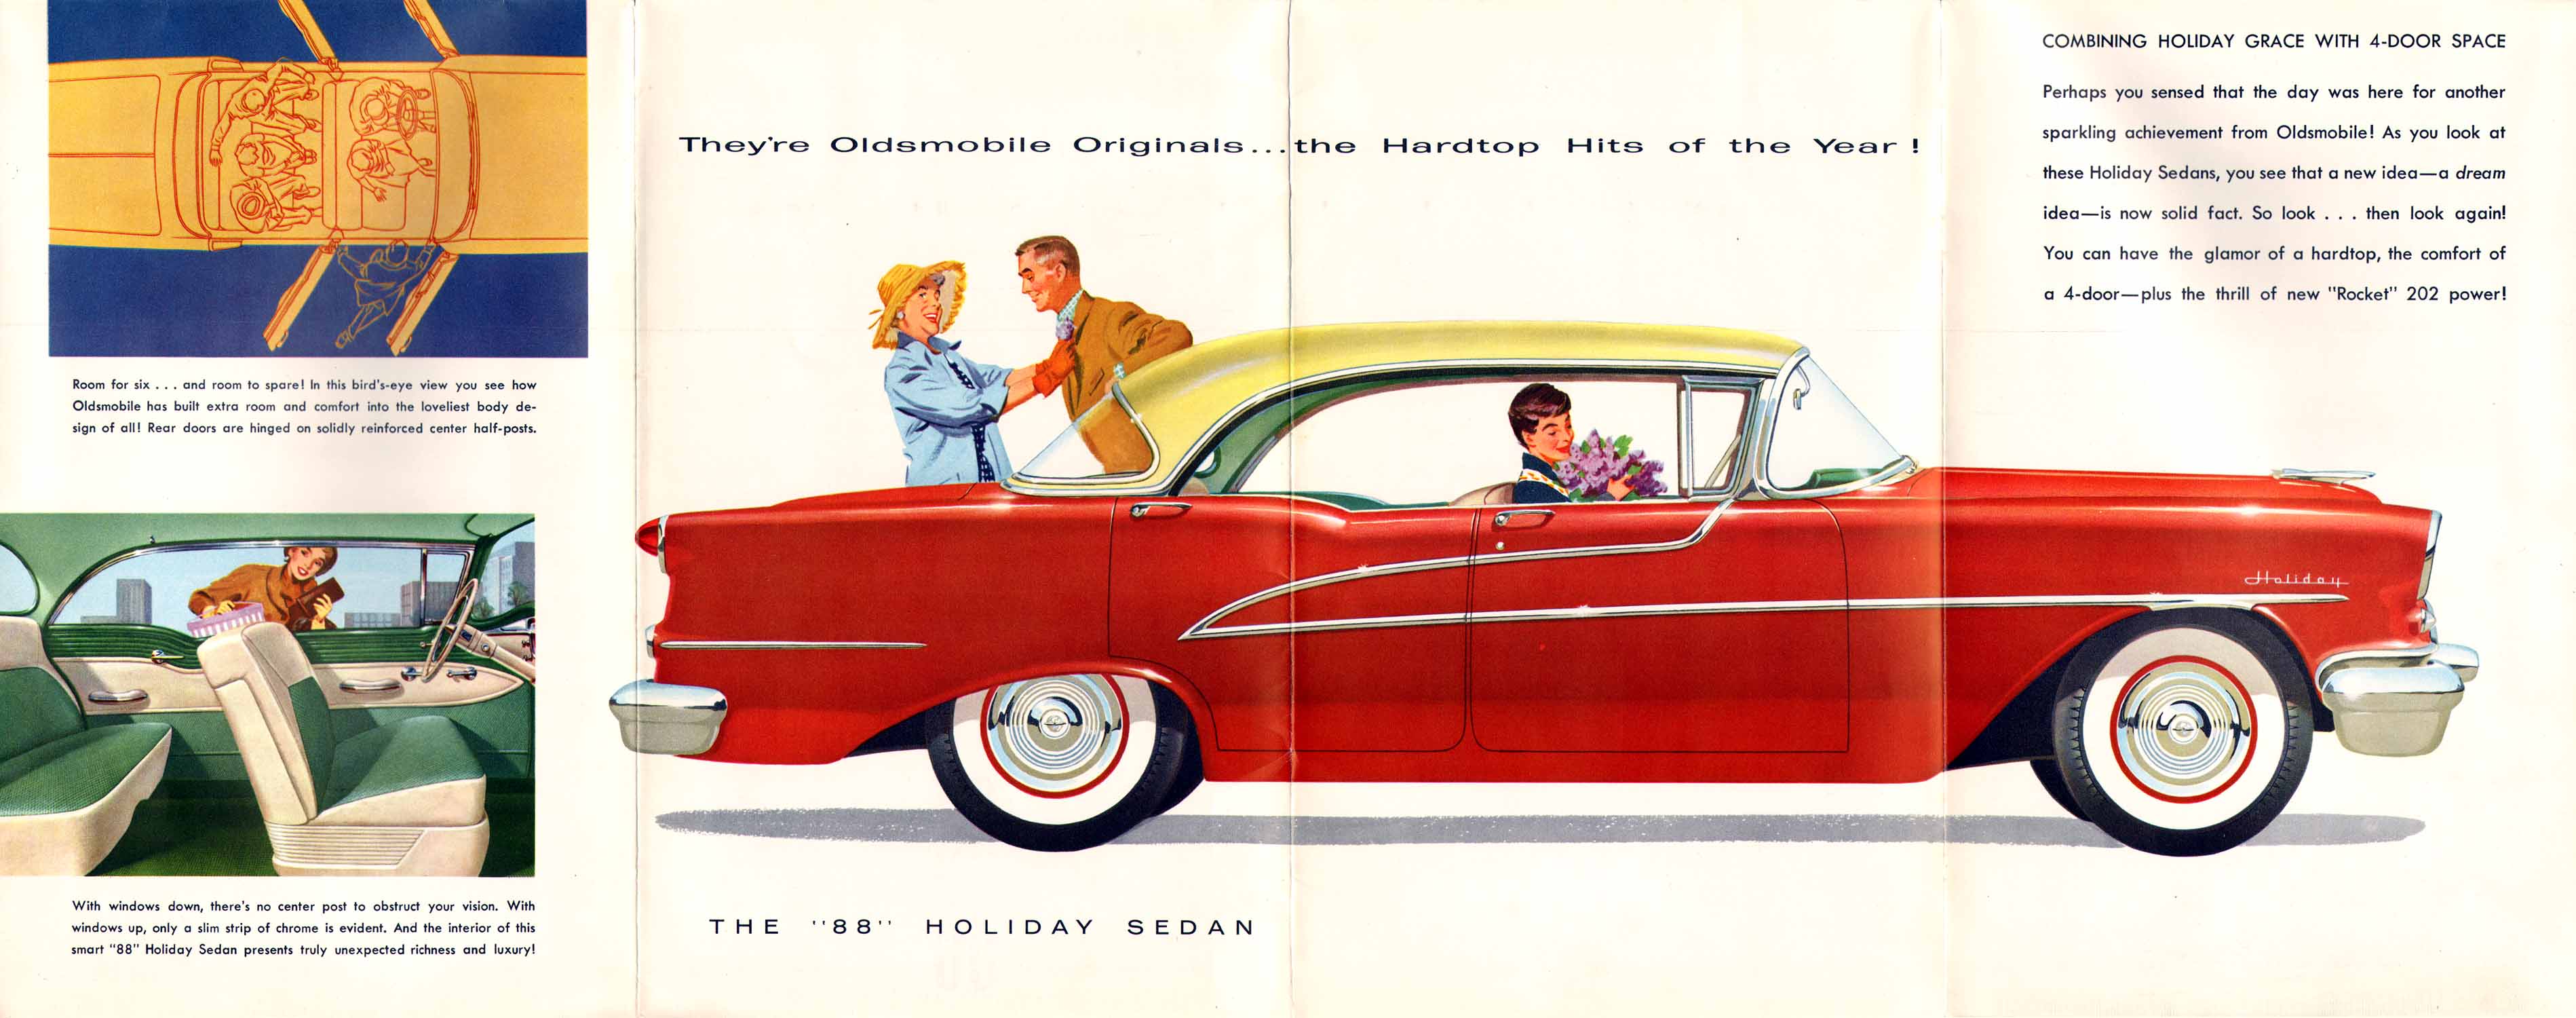 1955_Oldsmobile_Holiday_Sedan_Foldout-12-13-14-15